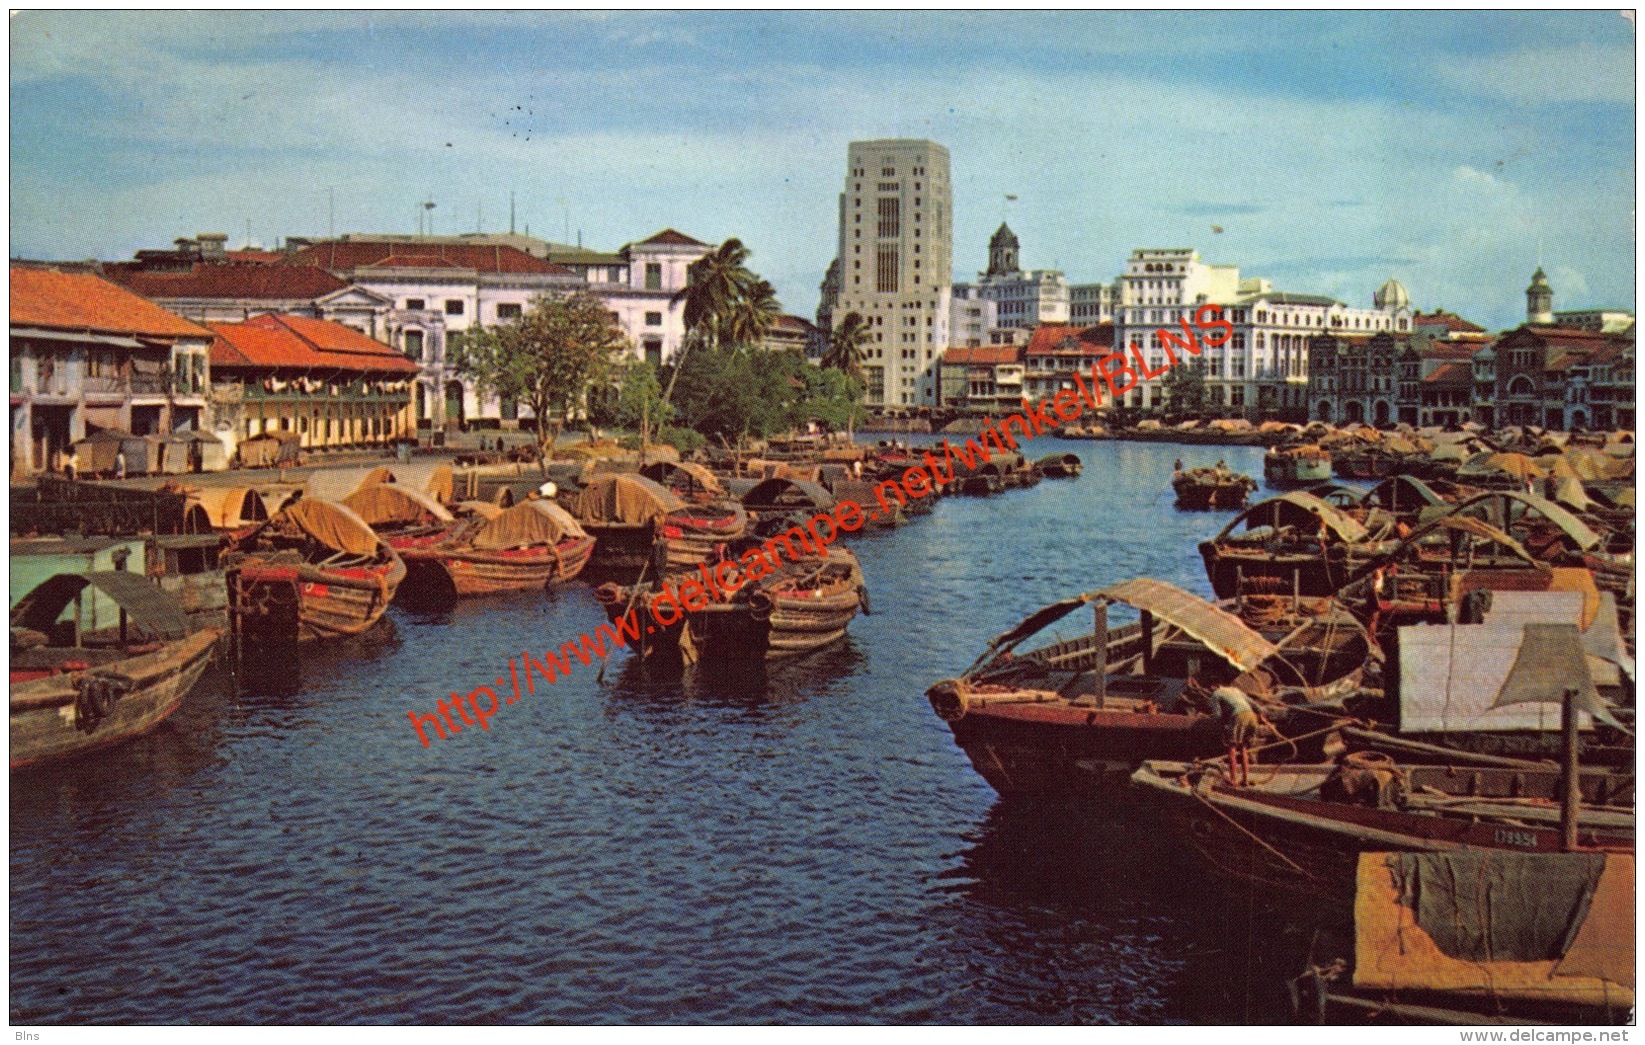 The Singapore River - Singapore